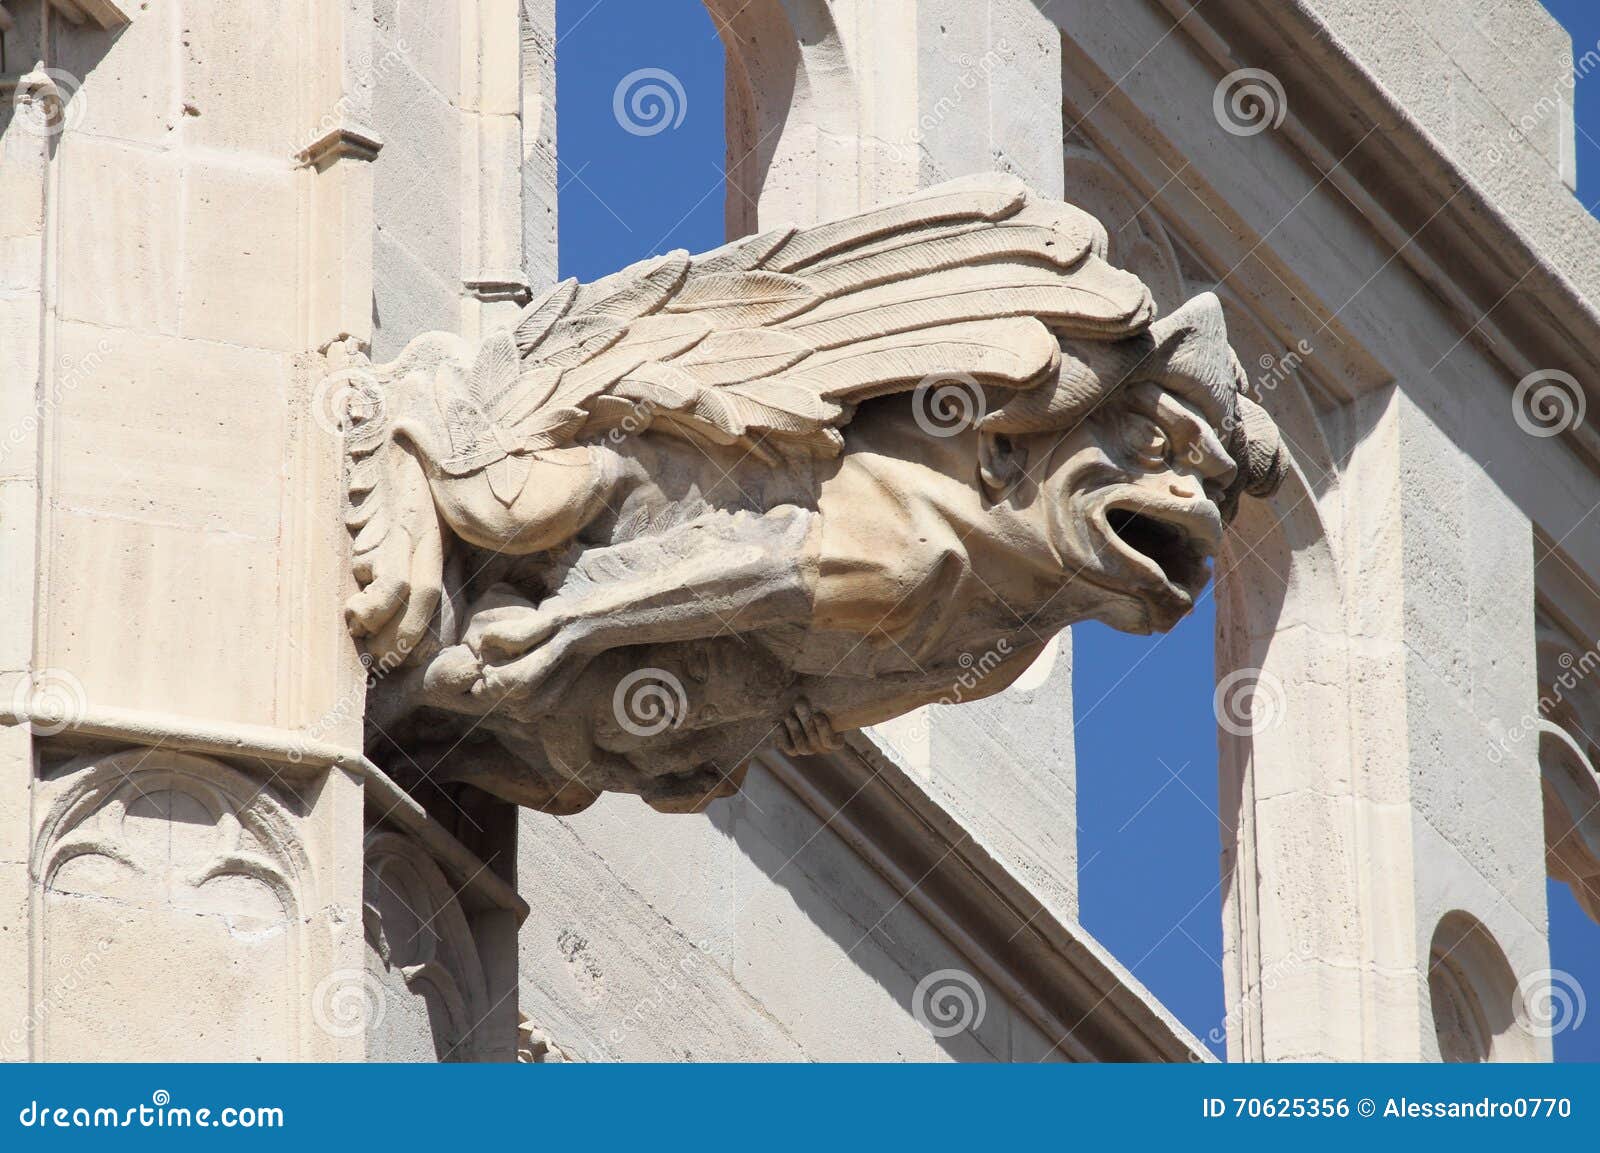 gargoyle at la lonja monument in palma de mallorca